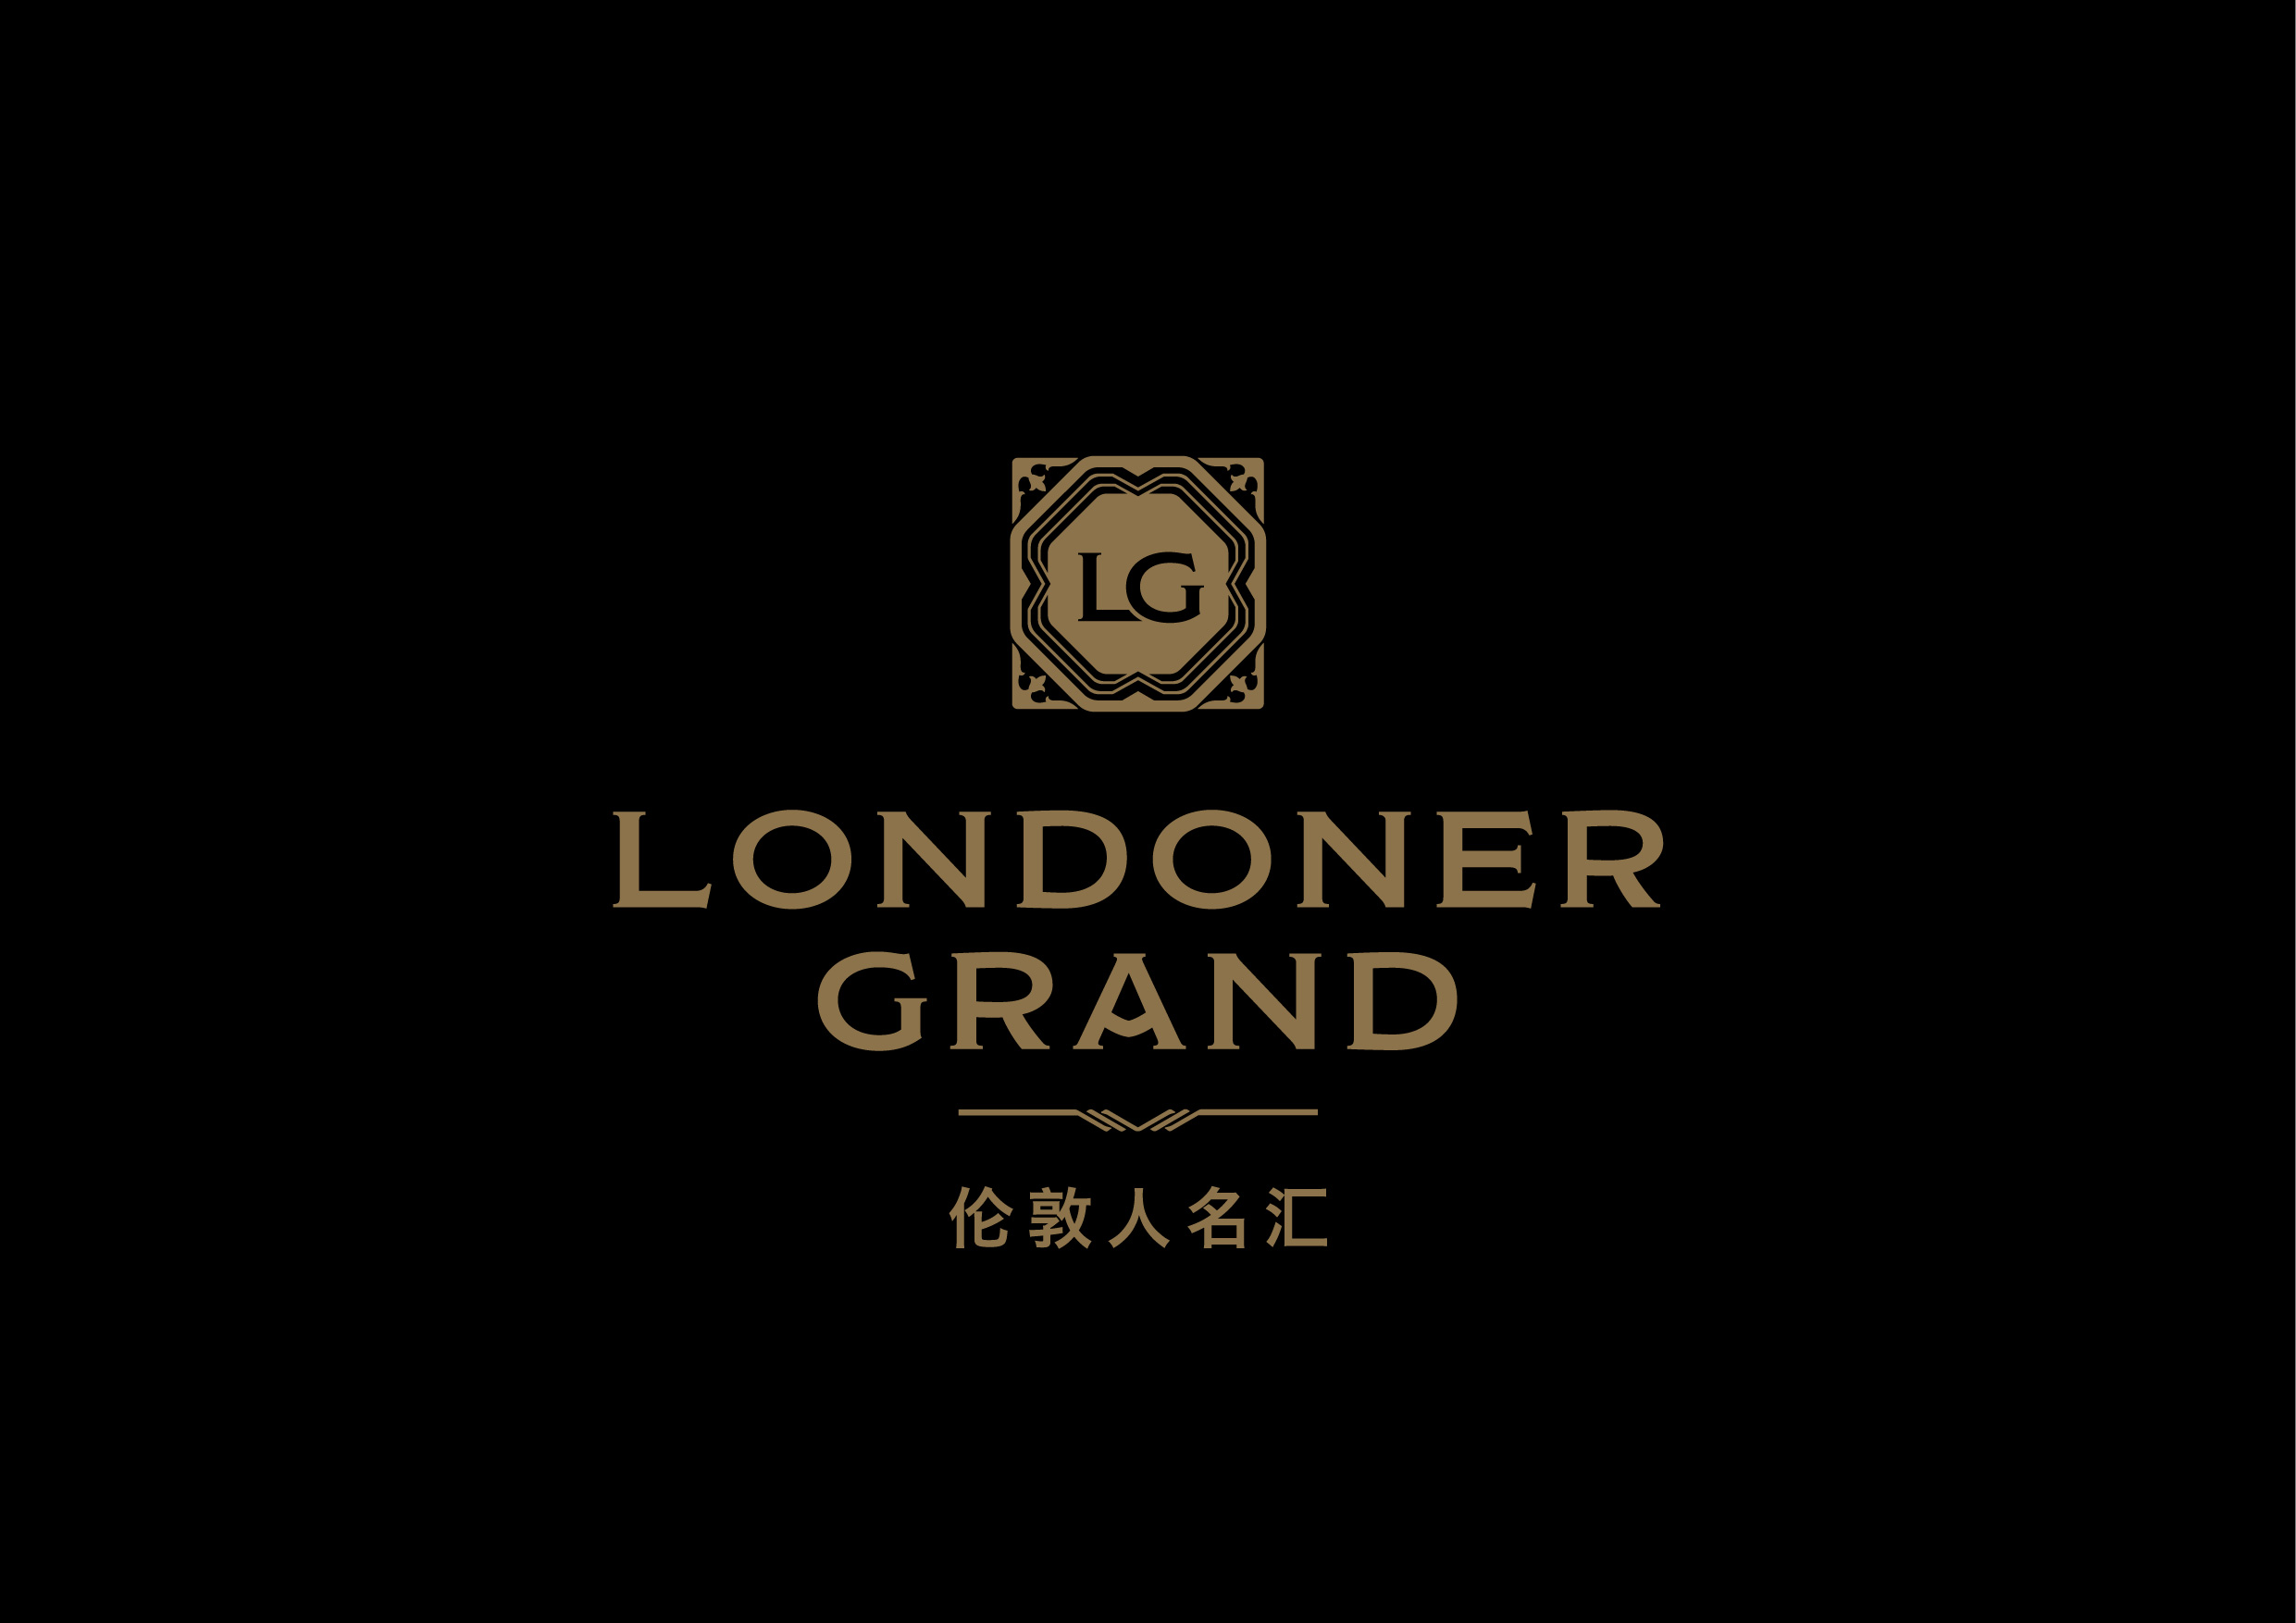 Londoner Grand Room Punch List